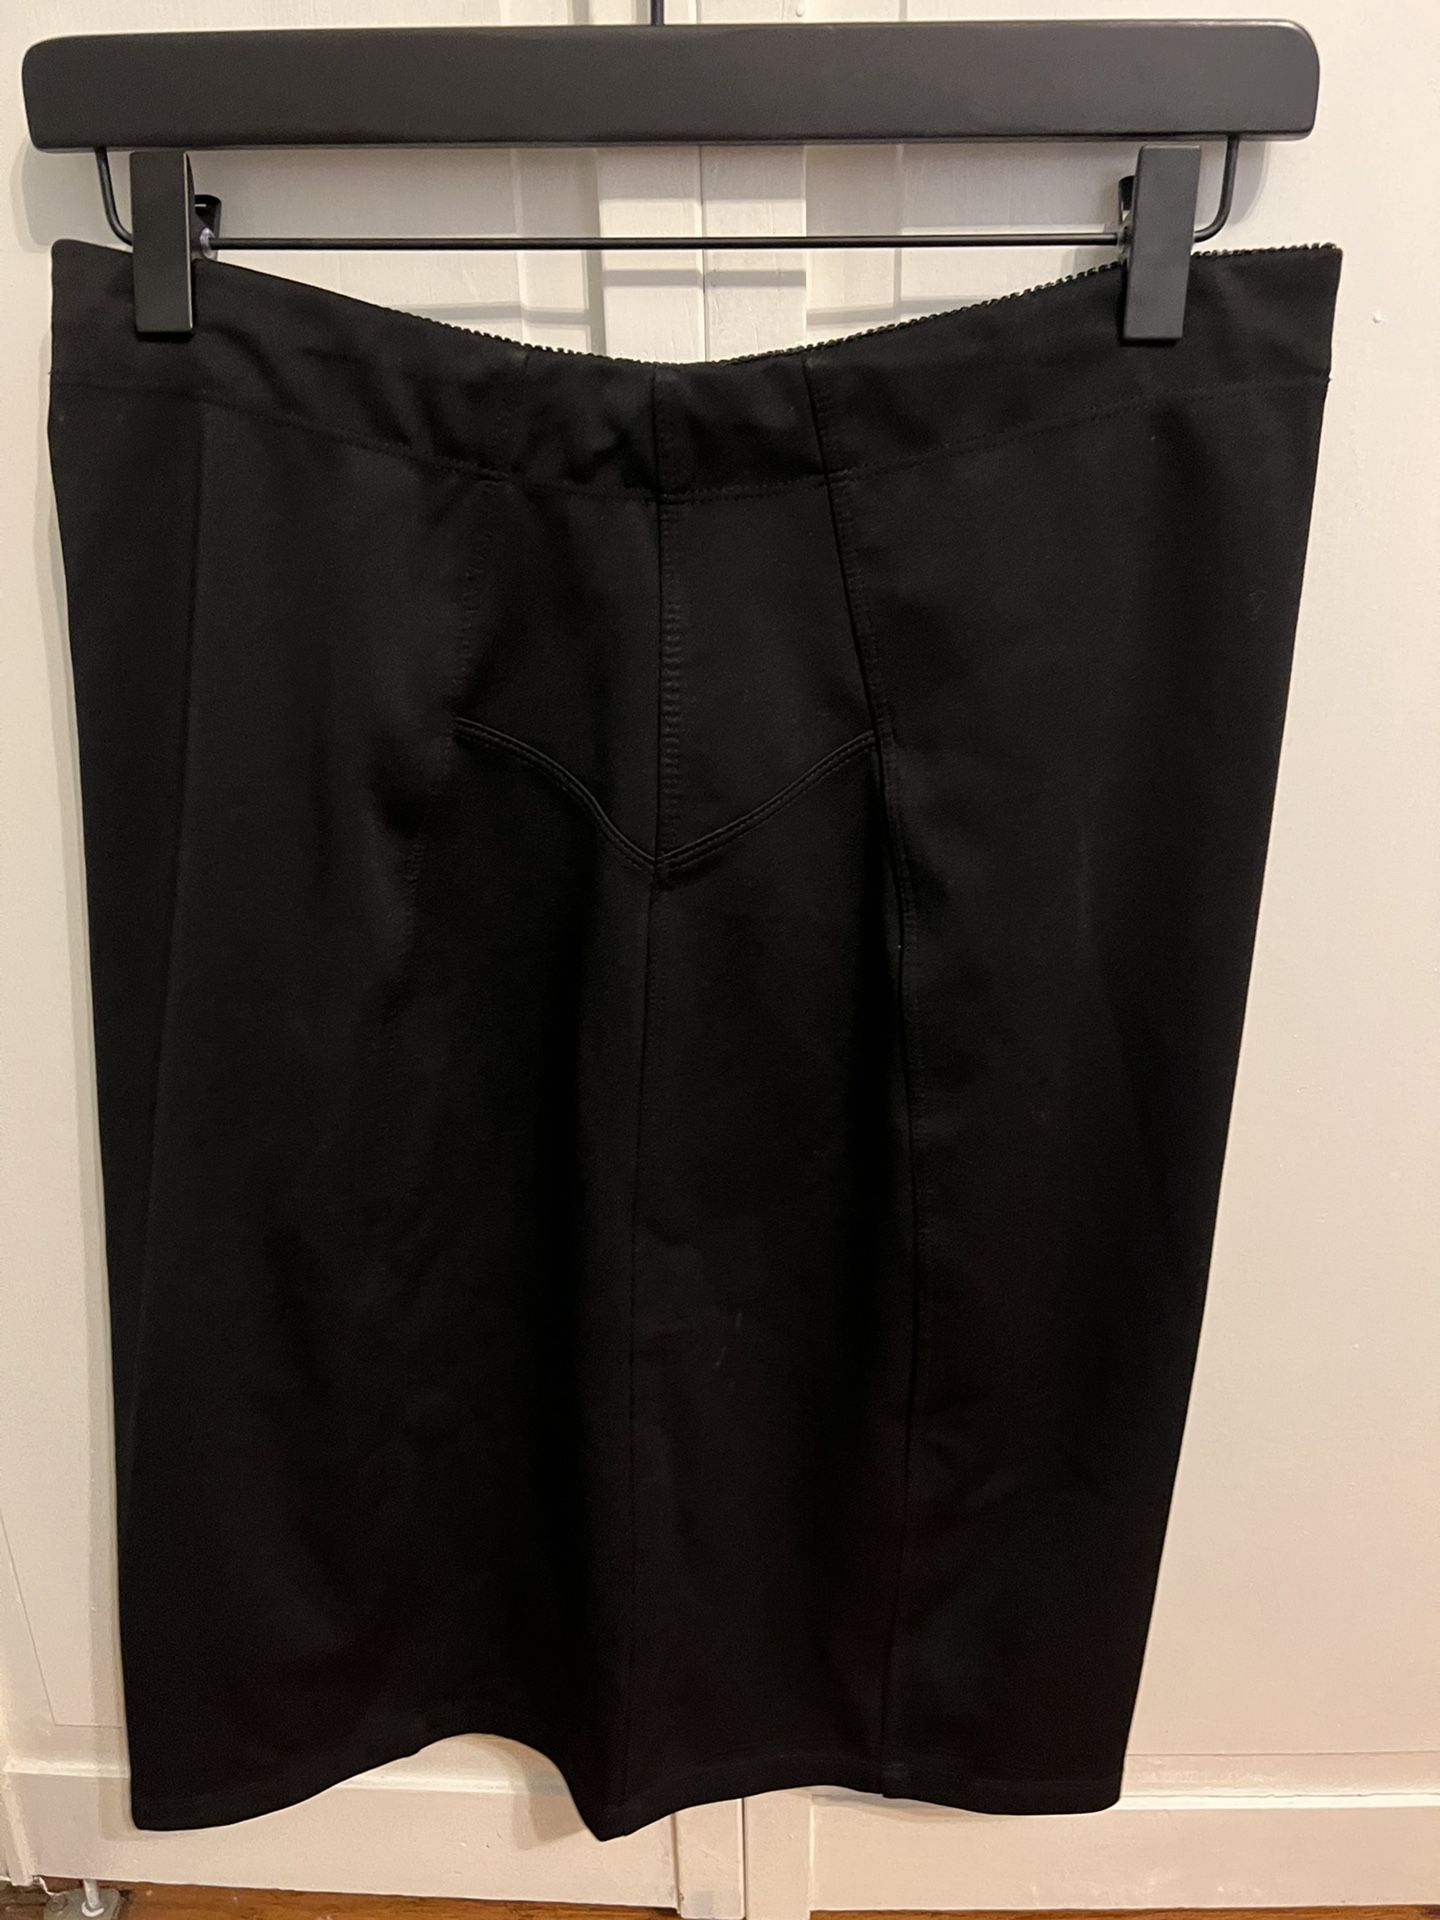 Black Pencil Skirt